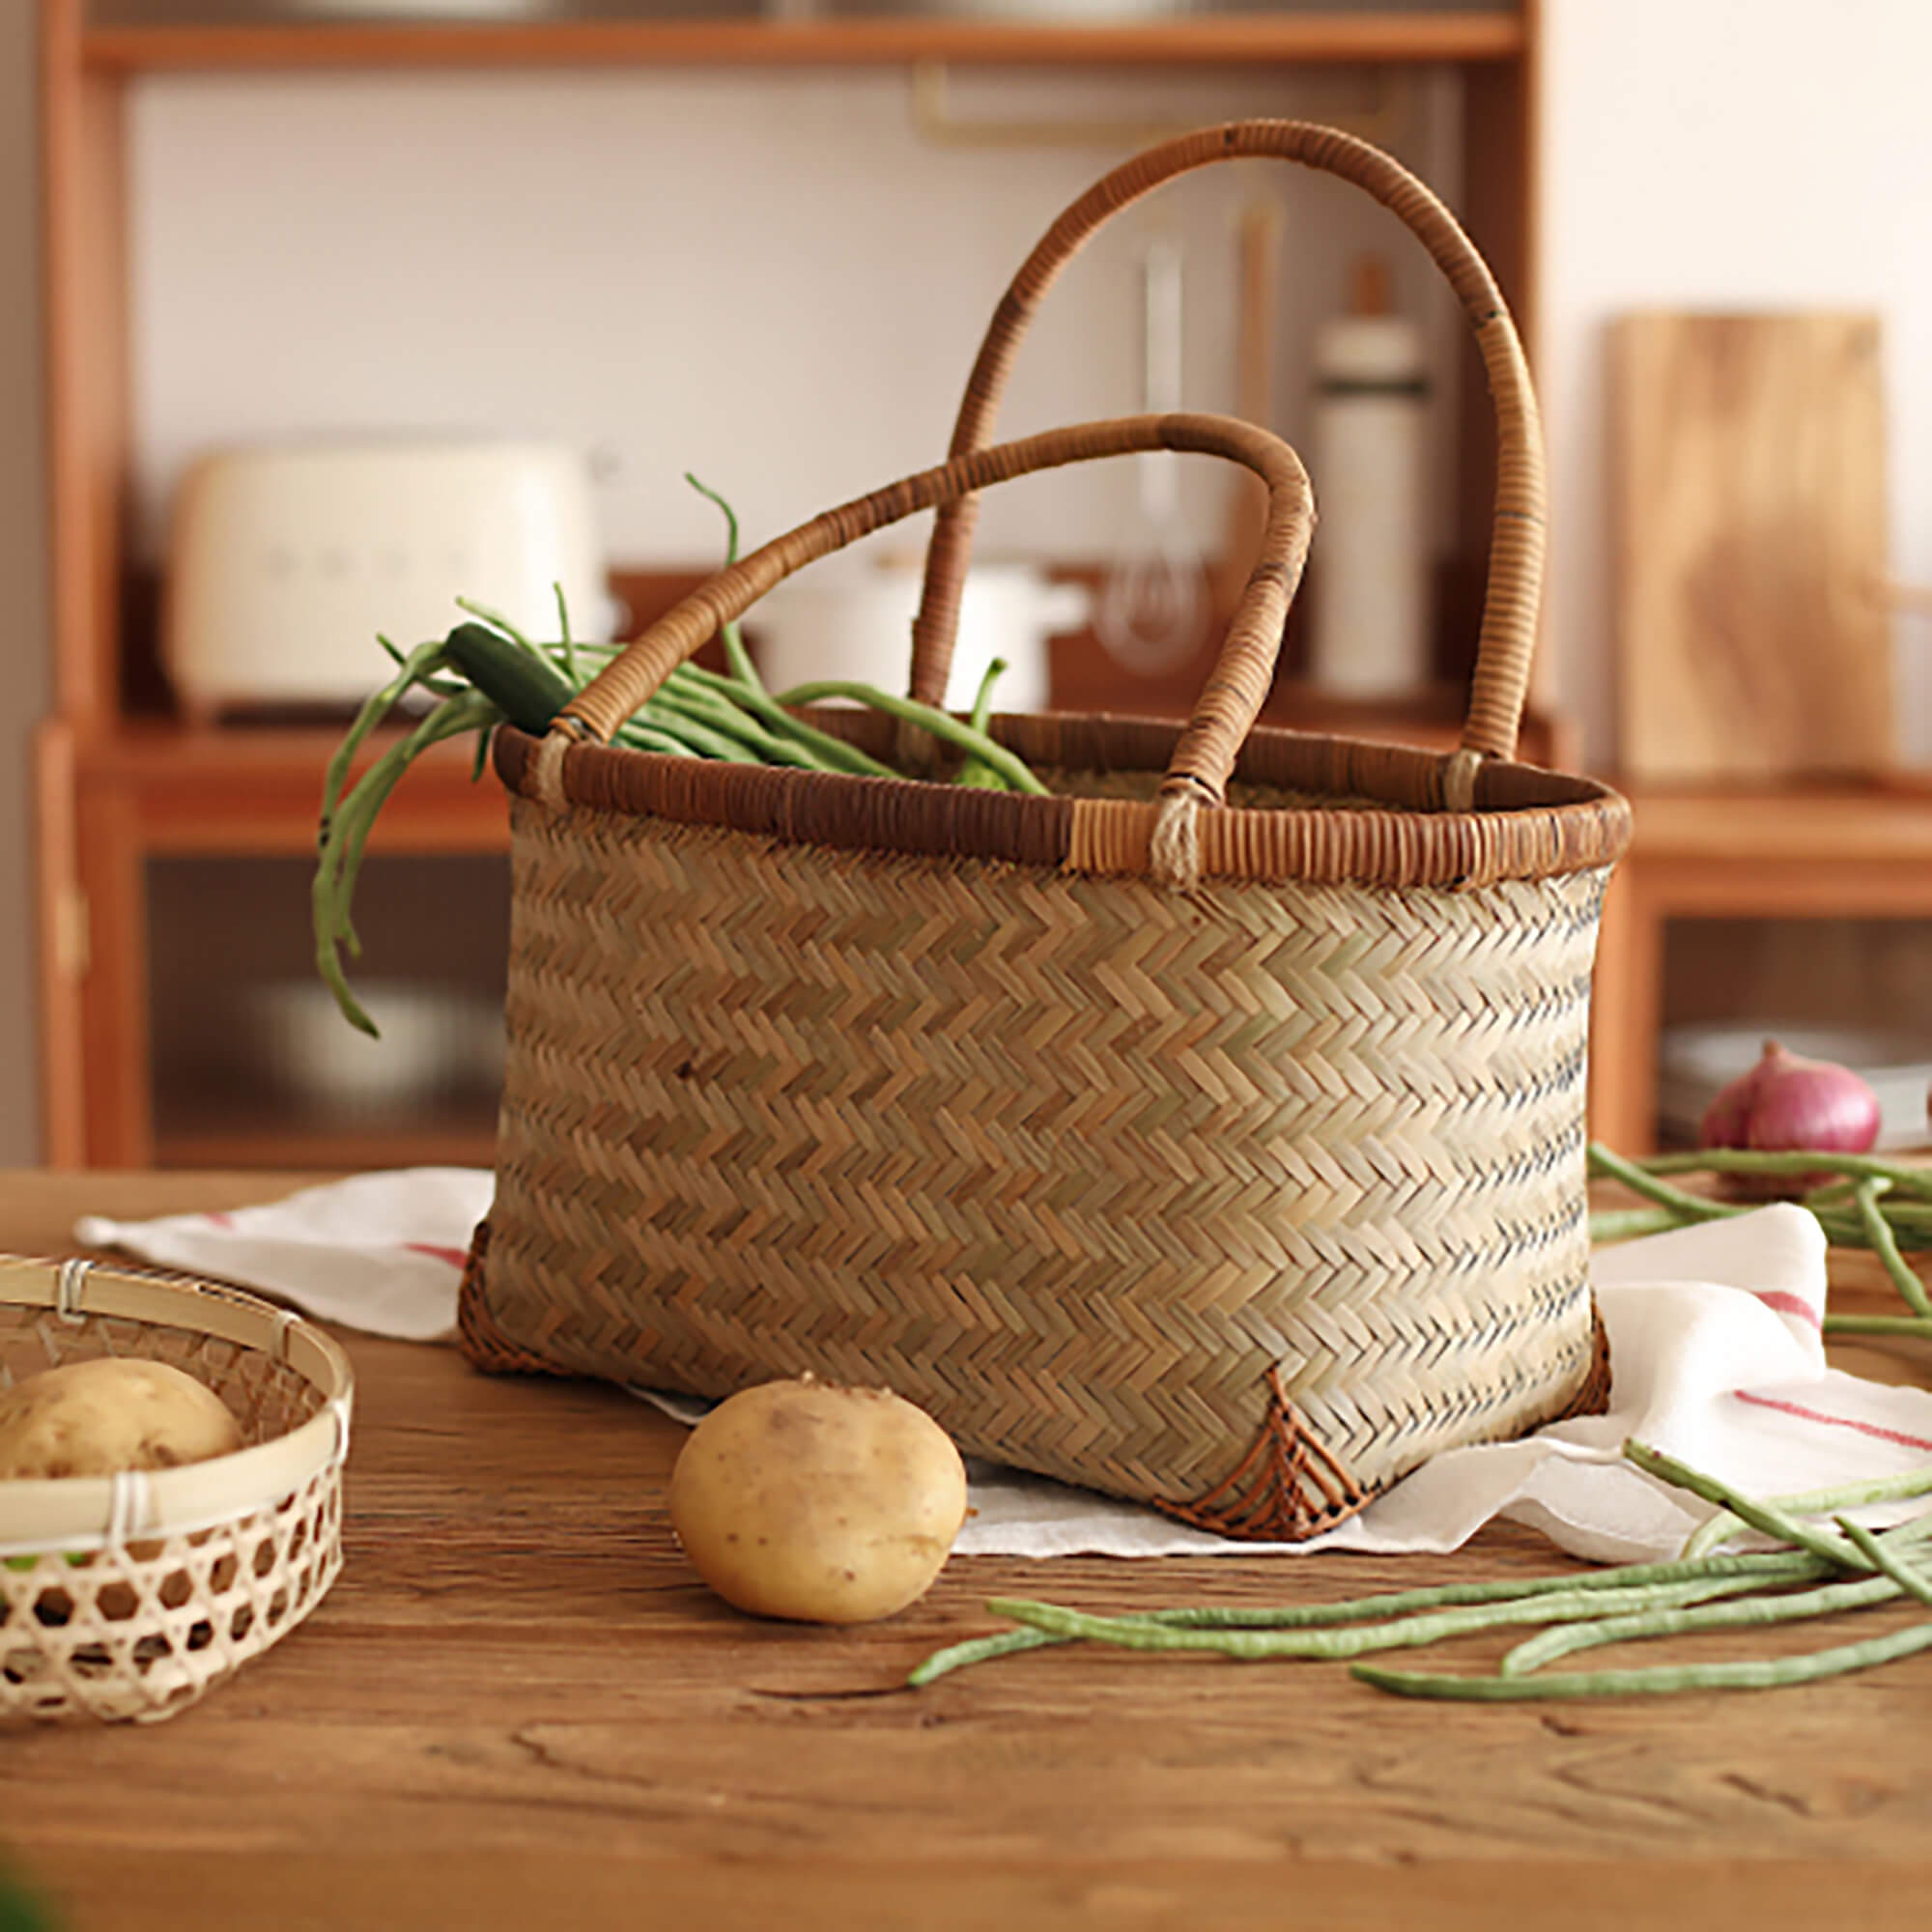 Jute Baskets, Eco-Friendly Storage Solutions